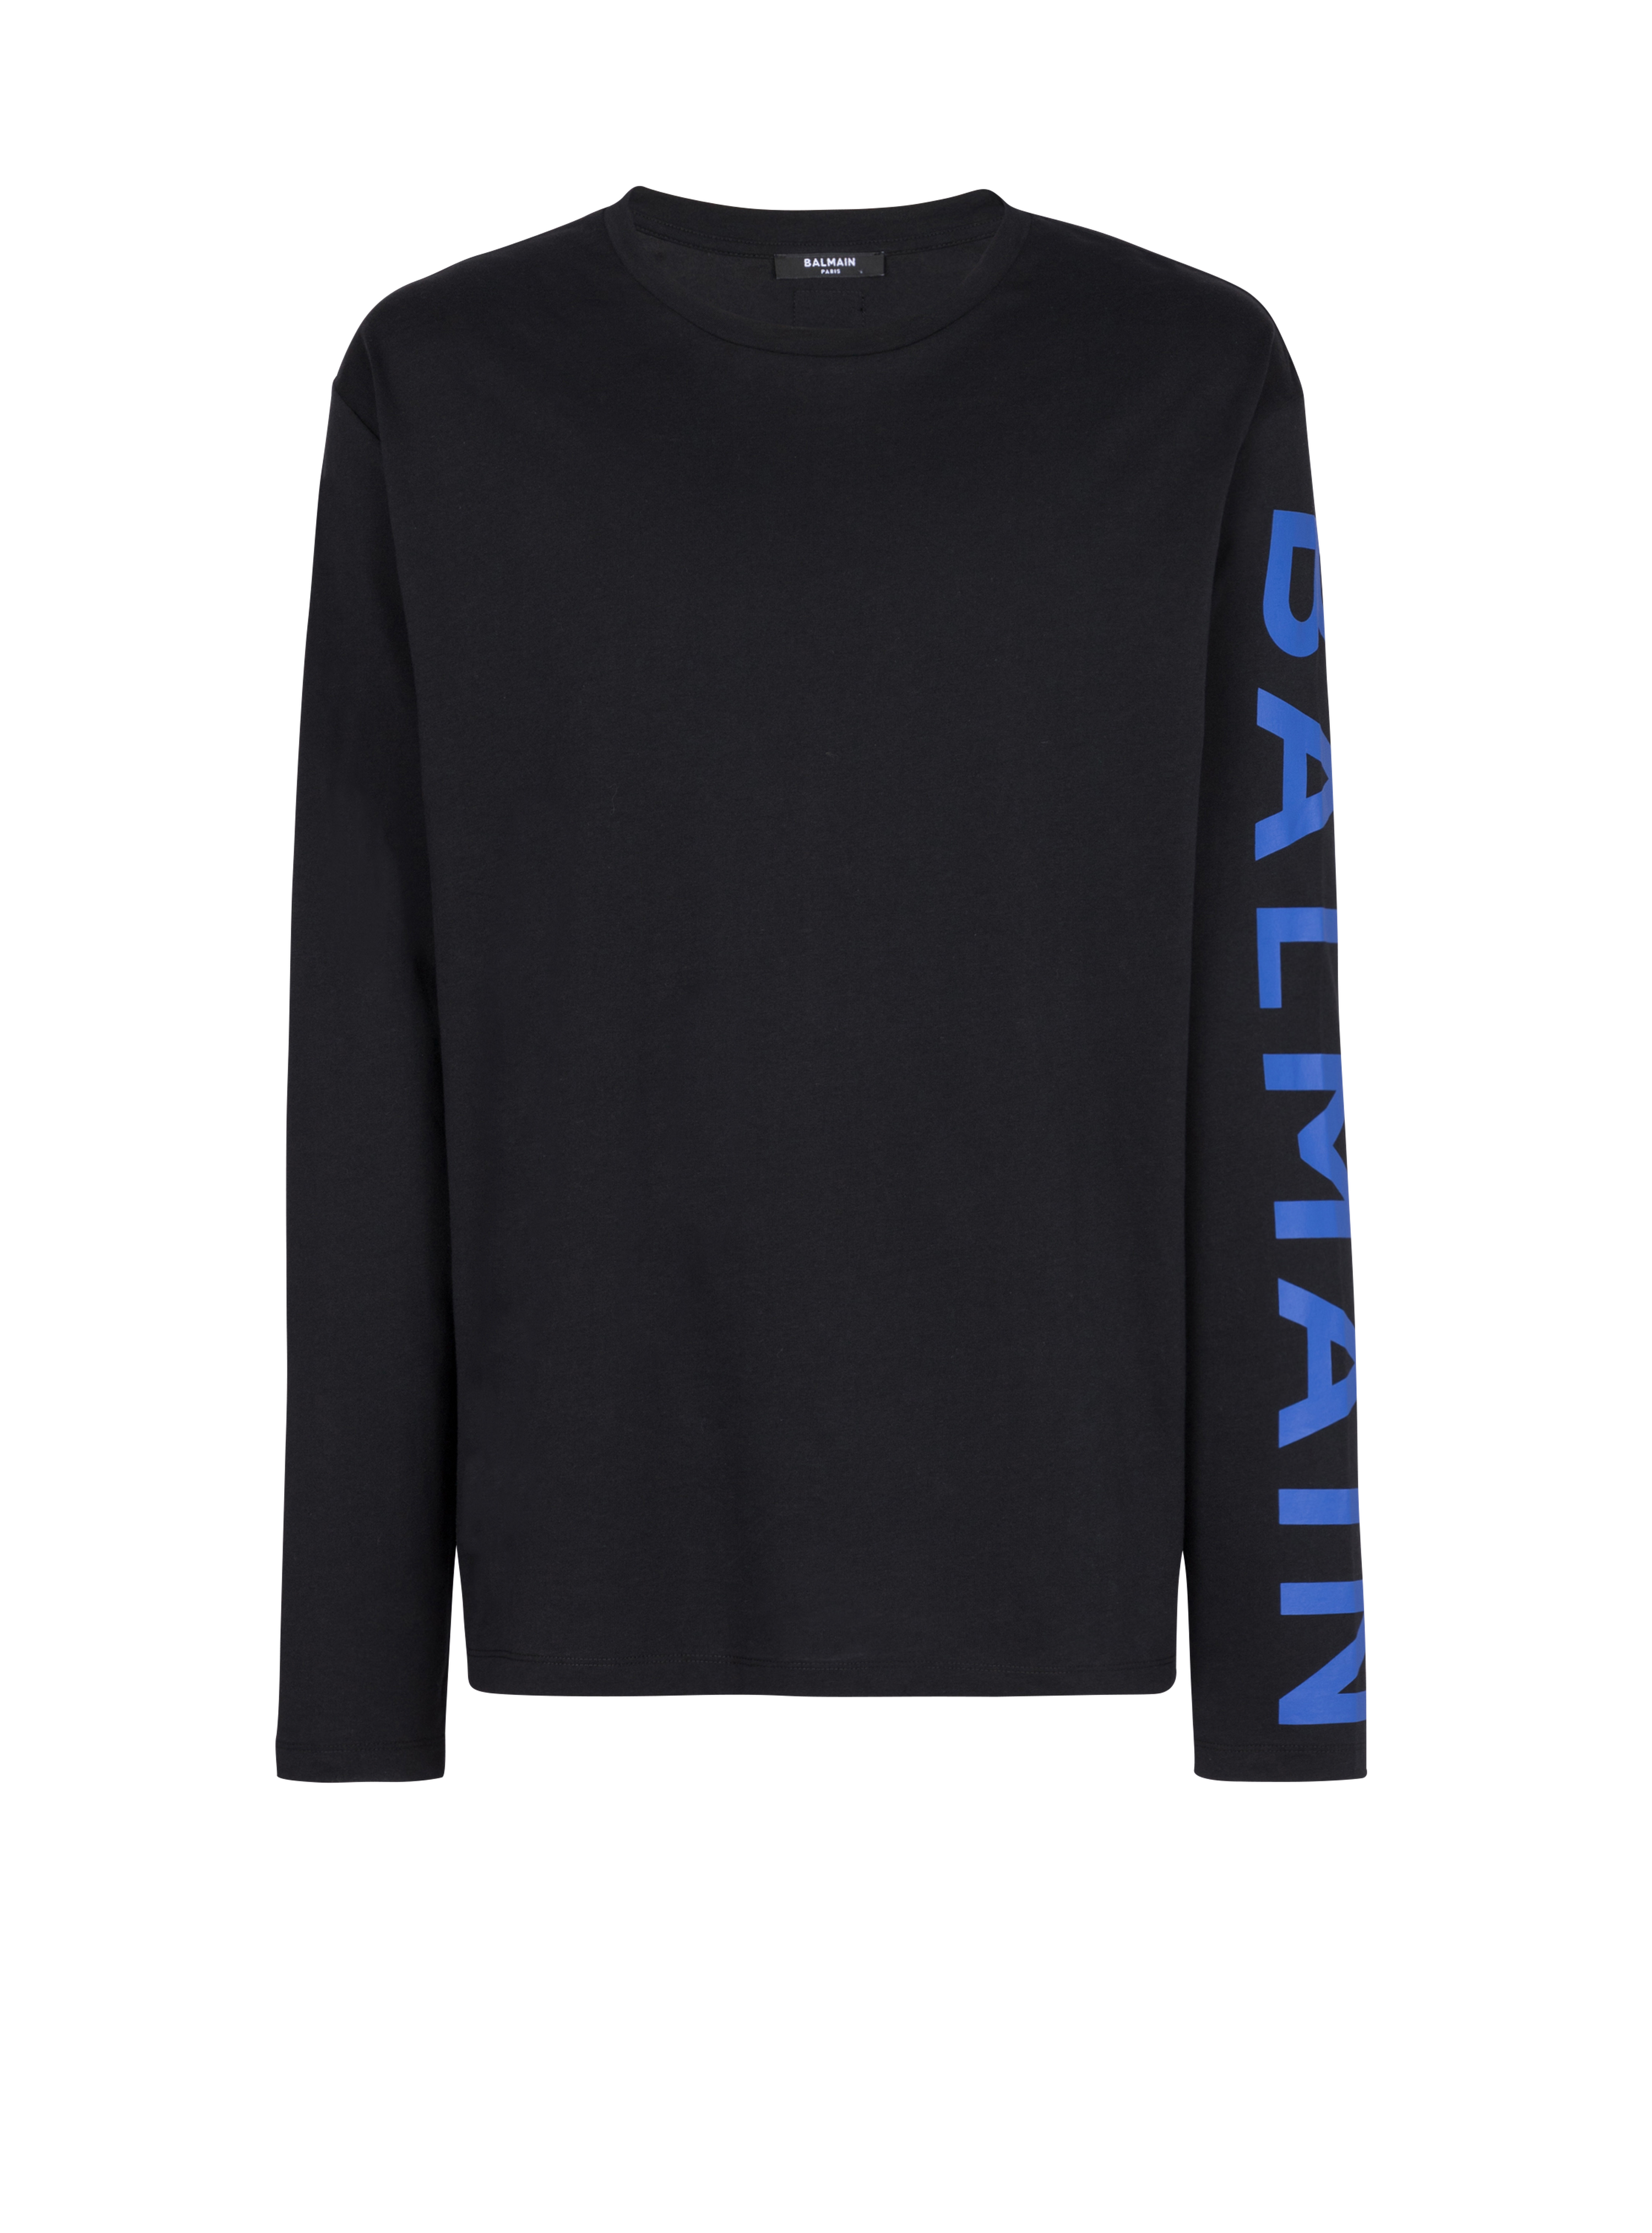 Eco-responsible cotton T-shirt with Balmain logo print, black